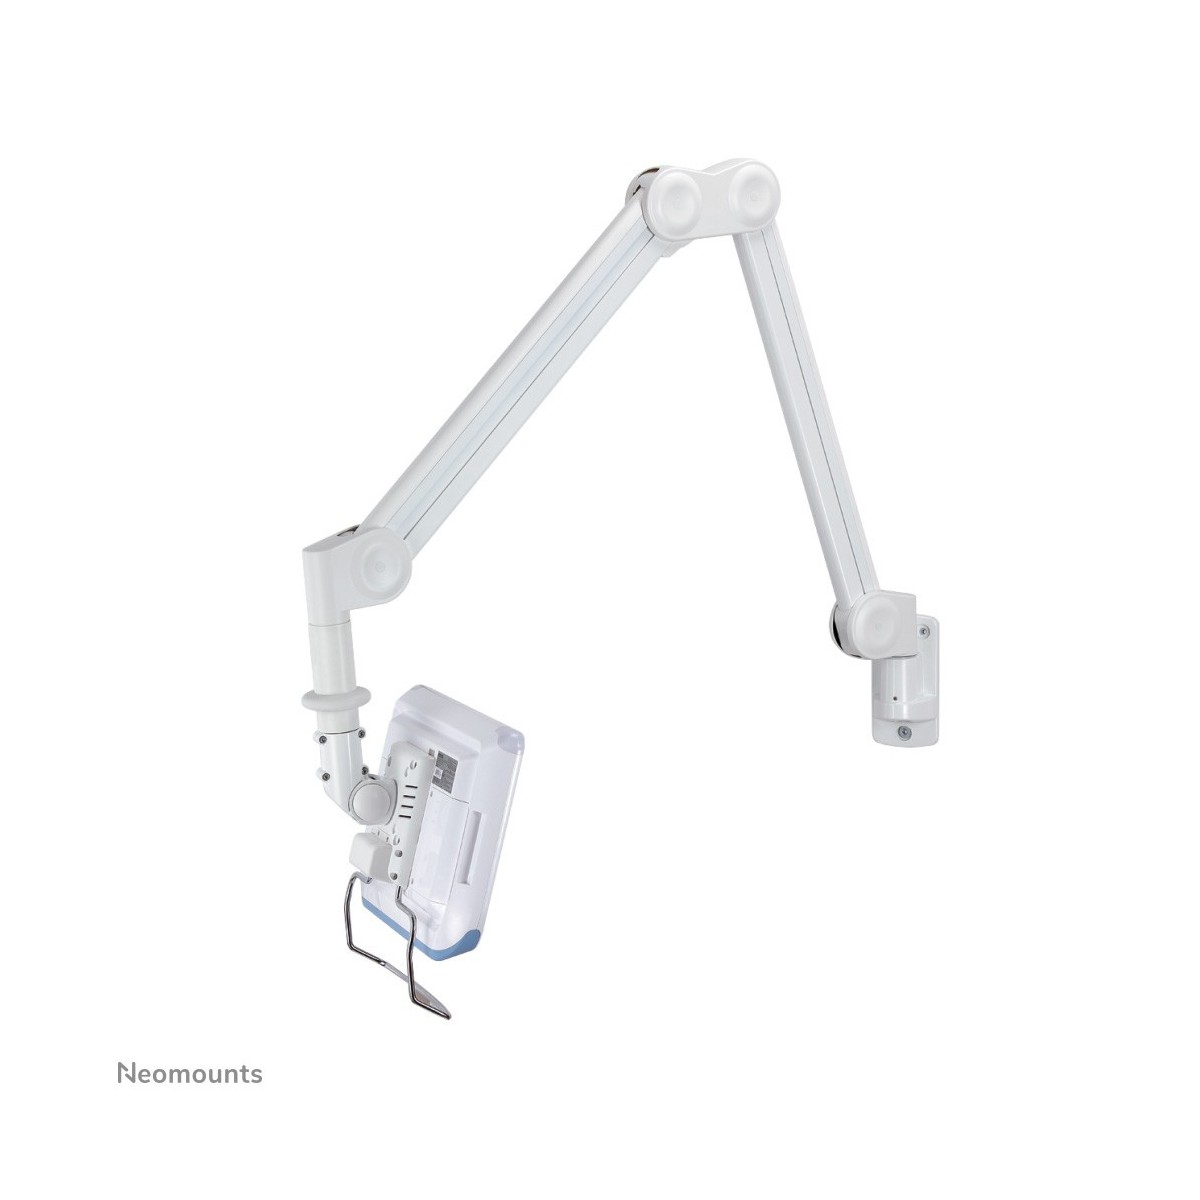 Neomounts medical flat screen wall mount - 7 kg - 25.4 cm (10") - 68.6 cm (27") - 100 x 100 mm - Height adjustment - White